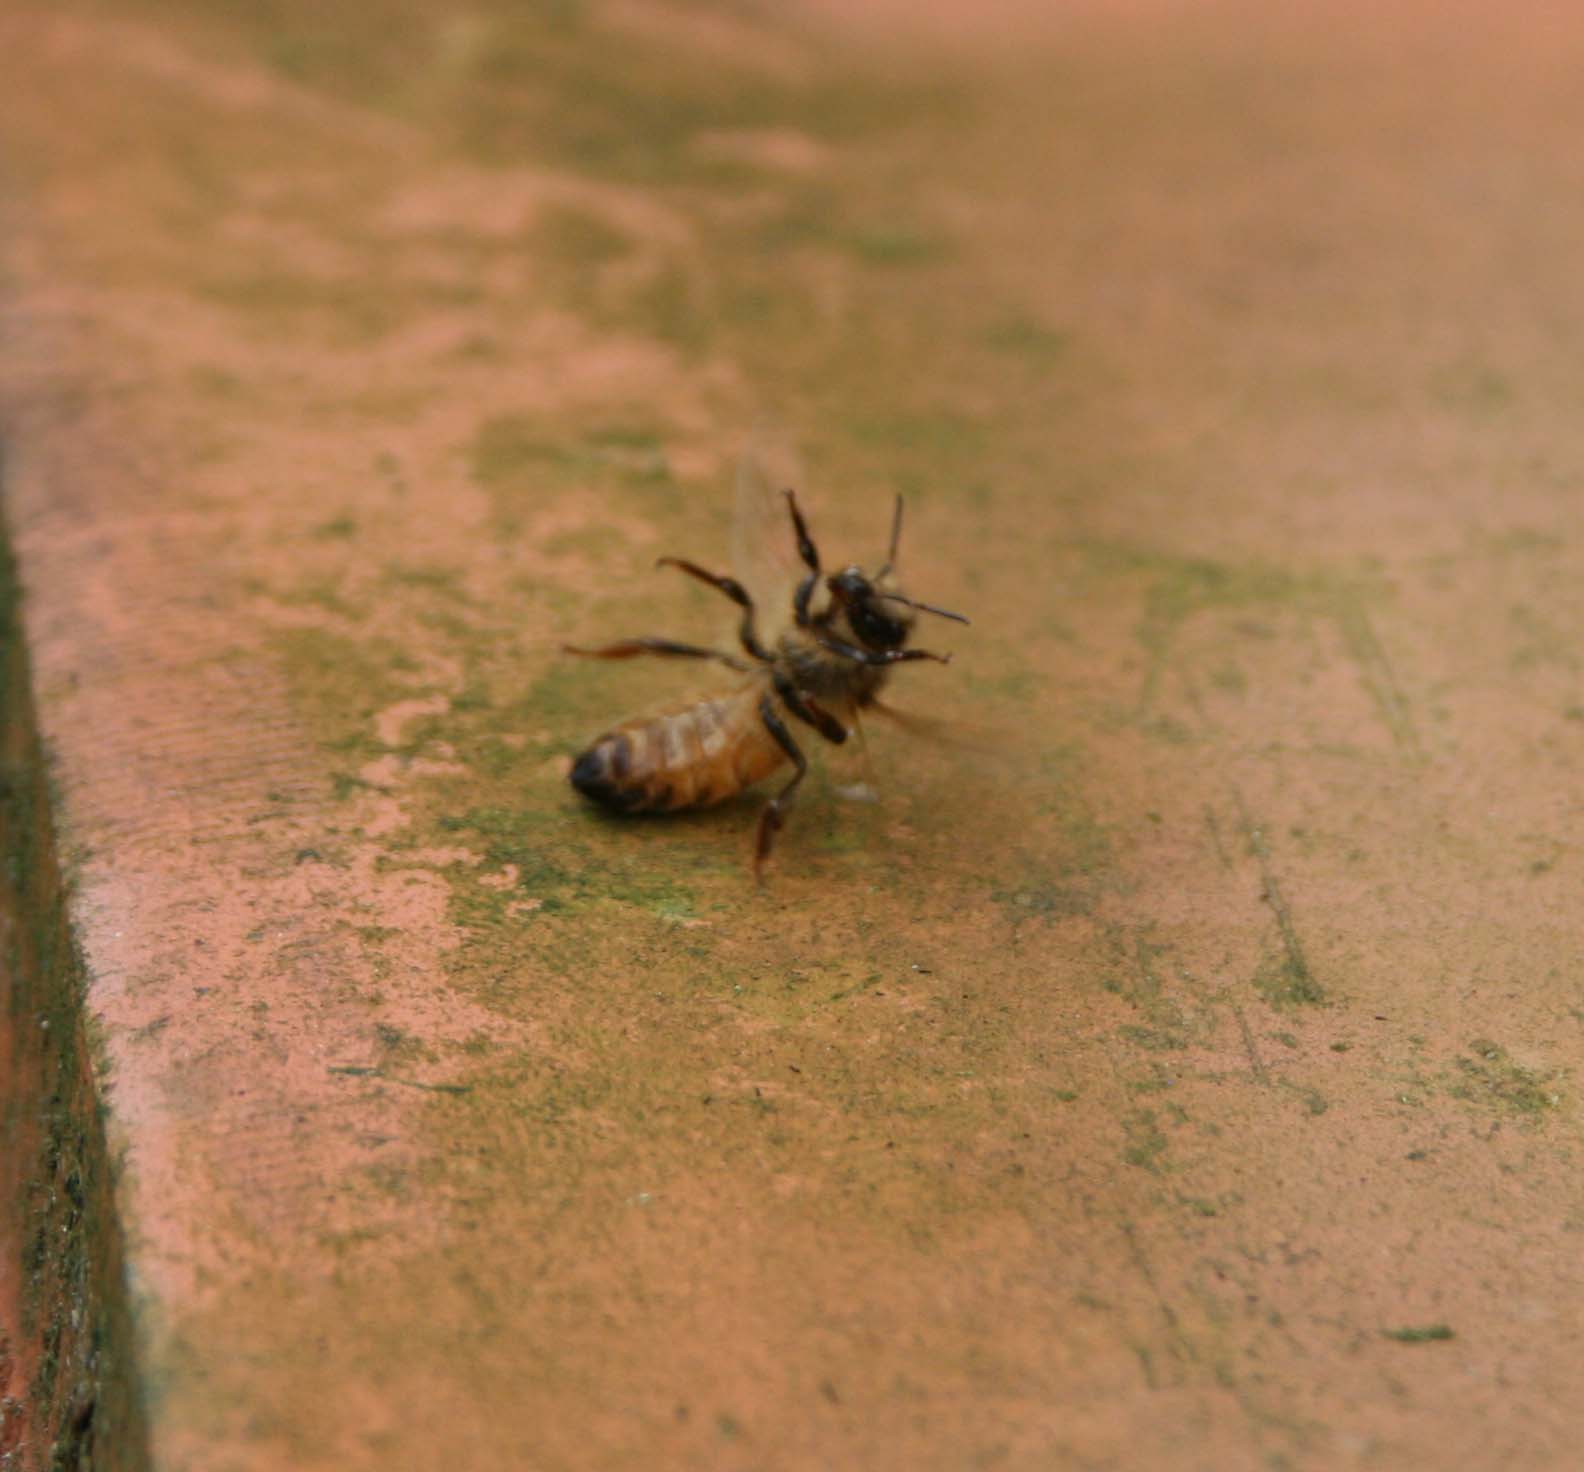 wasps-attacking-bees 049a.jpg